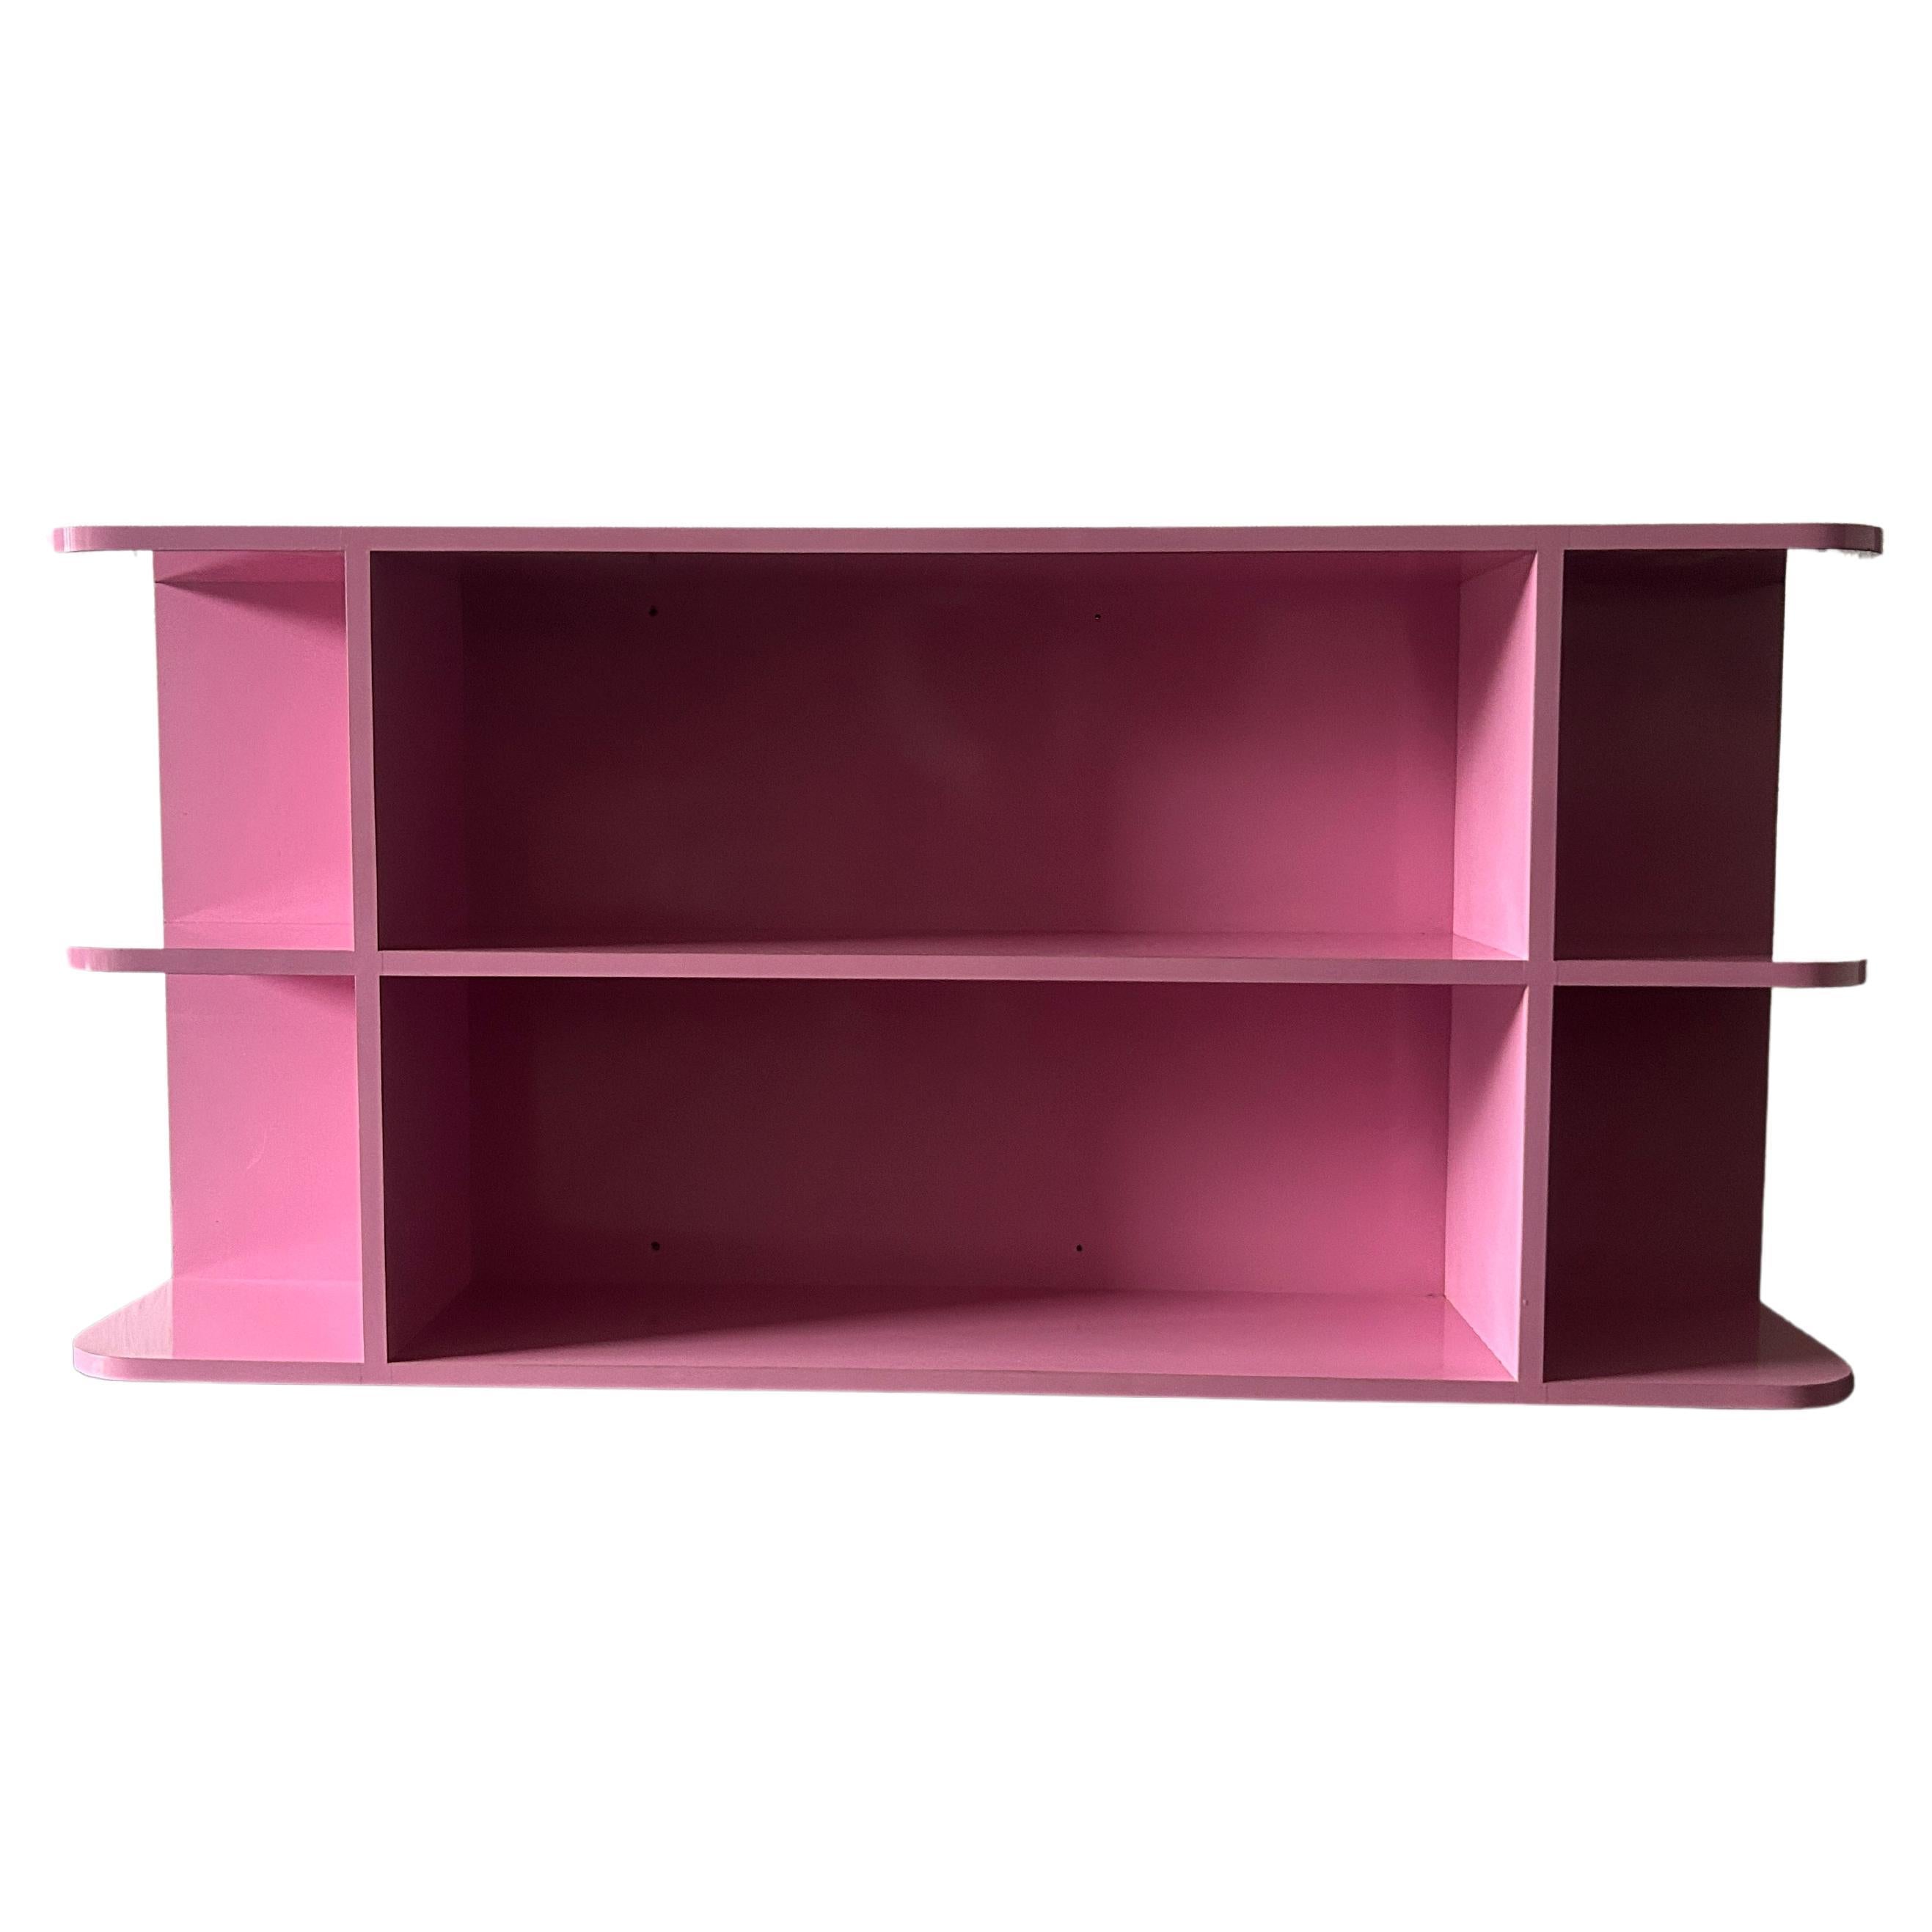 Pop art Post modern Pink Gloss Laminate floating wall mounted shelf unit For Sale